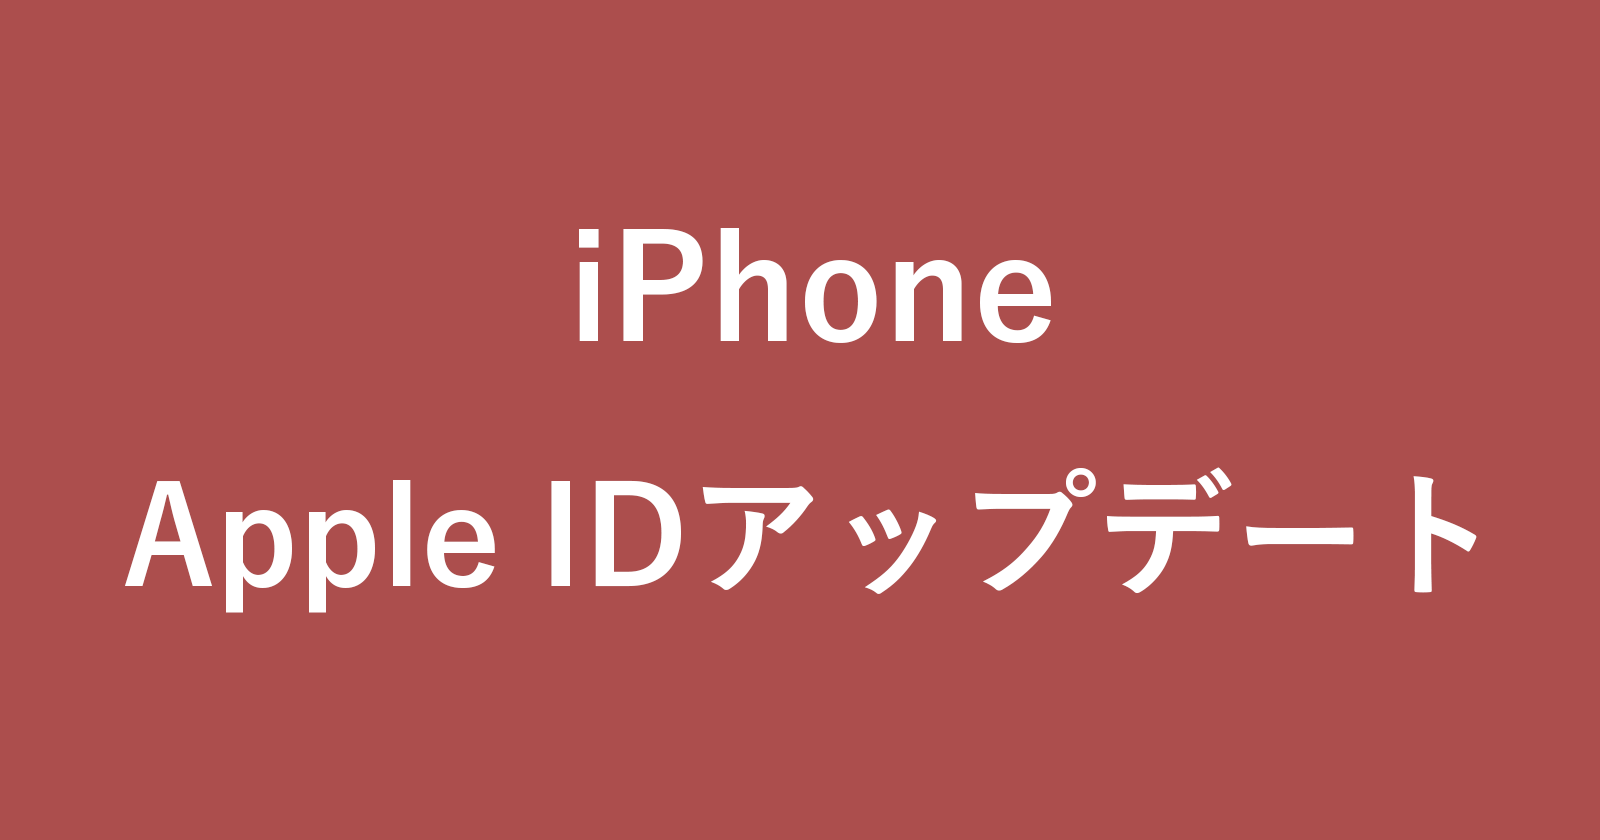 iphone apple id update